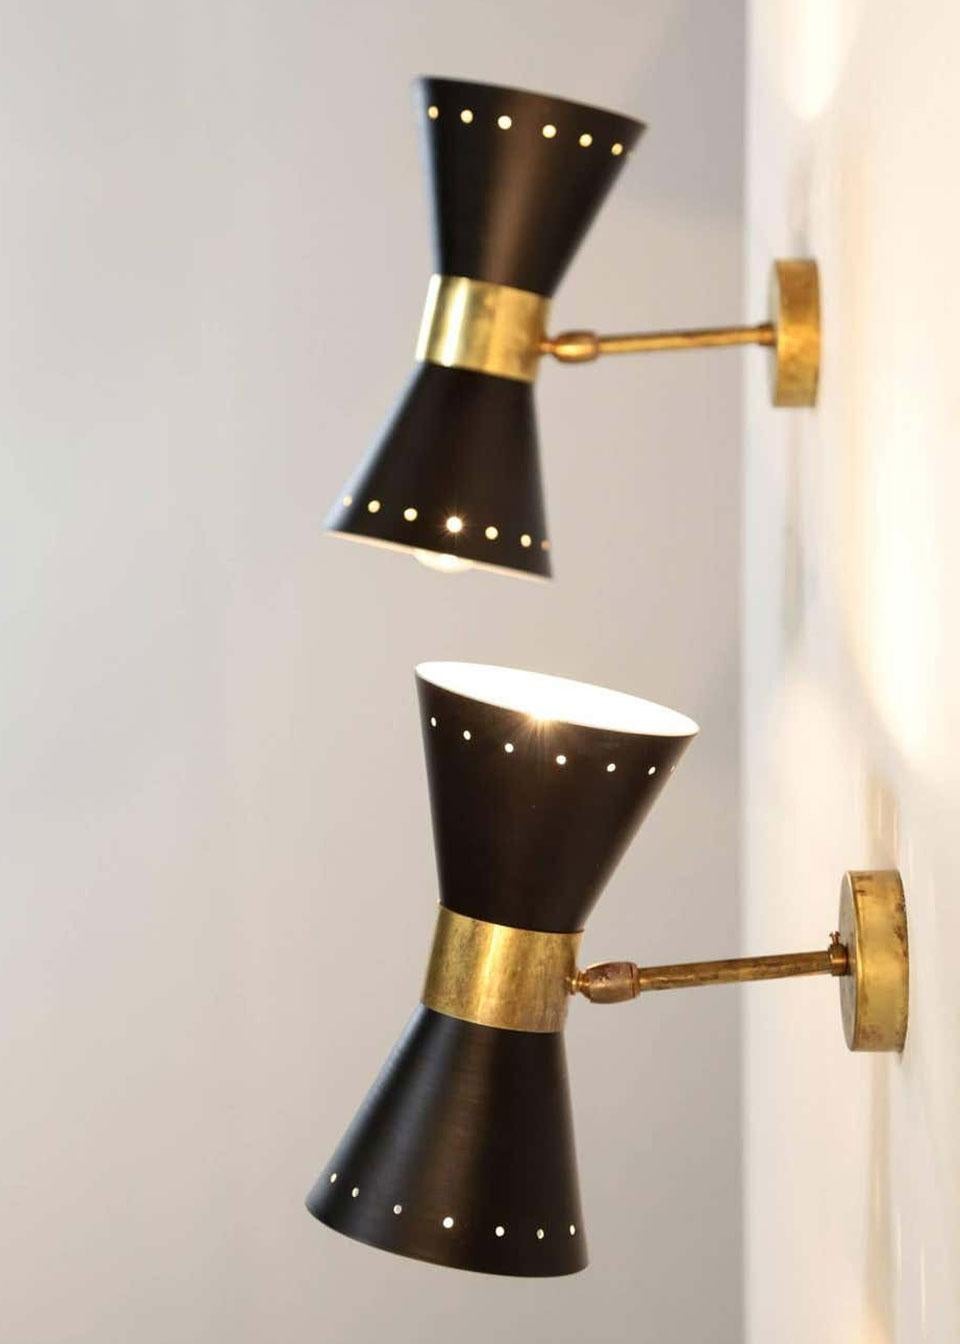 Metal 1 of 6 Italian Modern Design Wall Light Diabolo Sconce Stilnovo Style Brass 1950